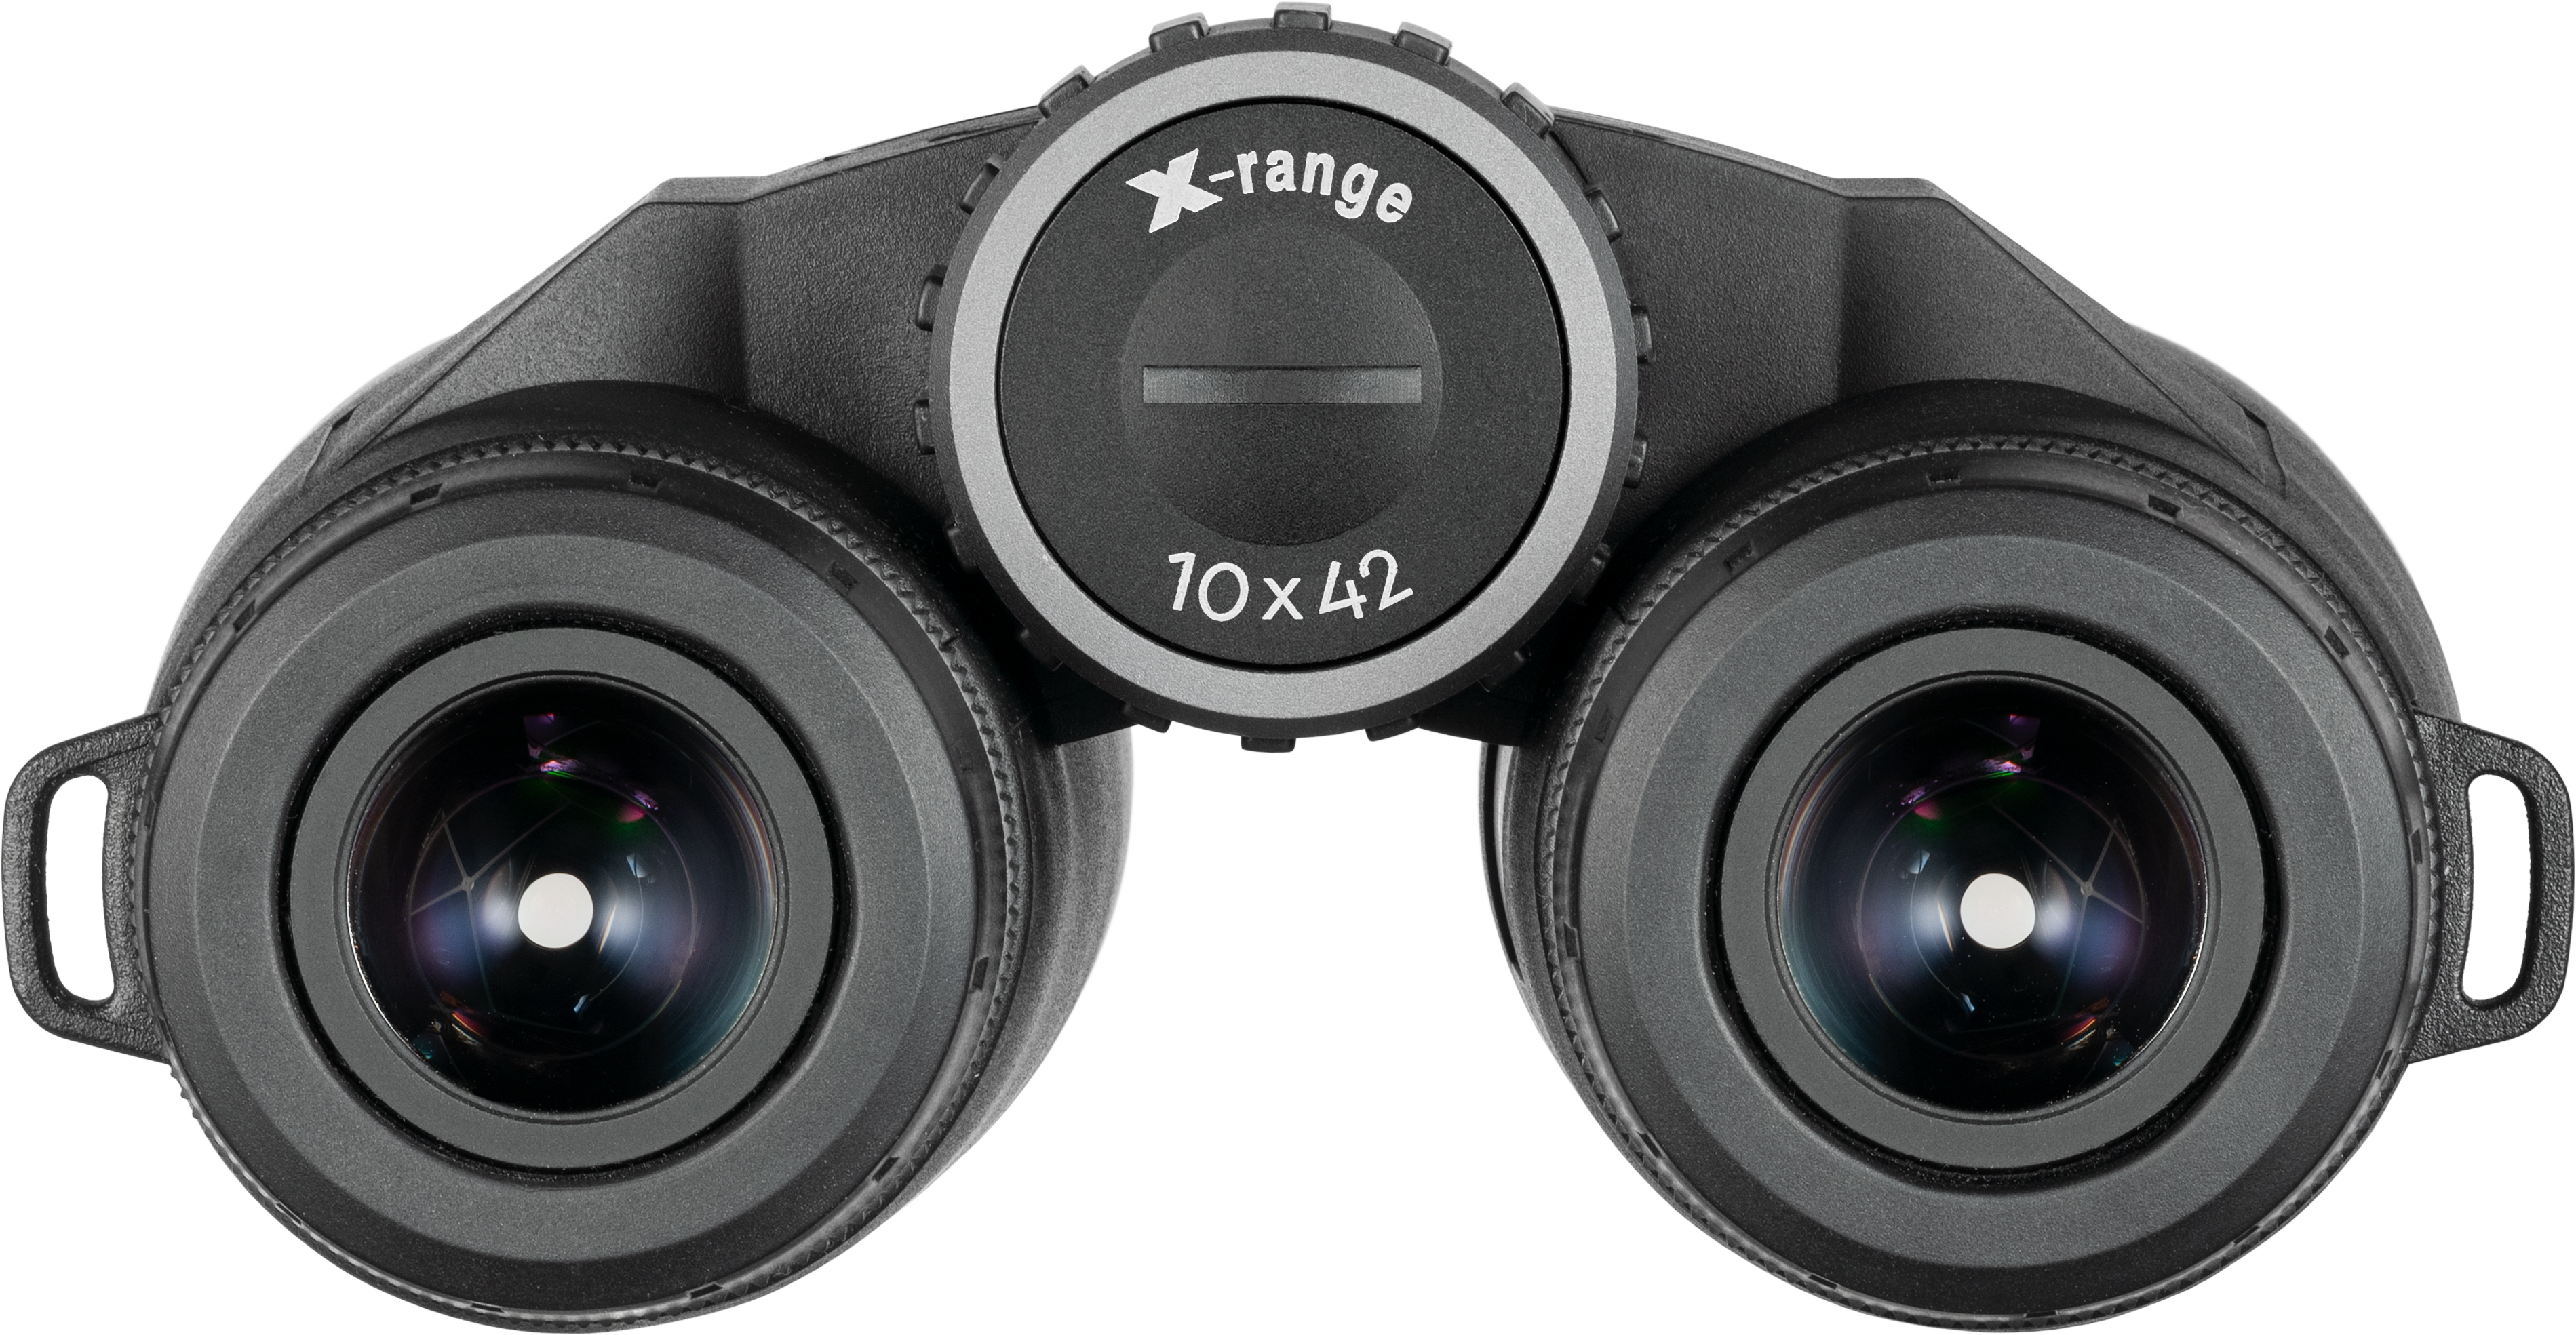 Minox Binocular X-range 10x42